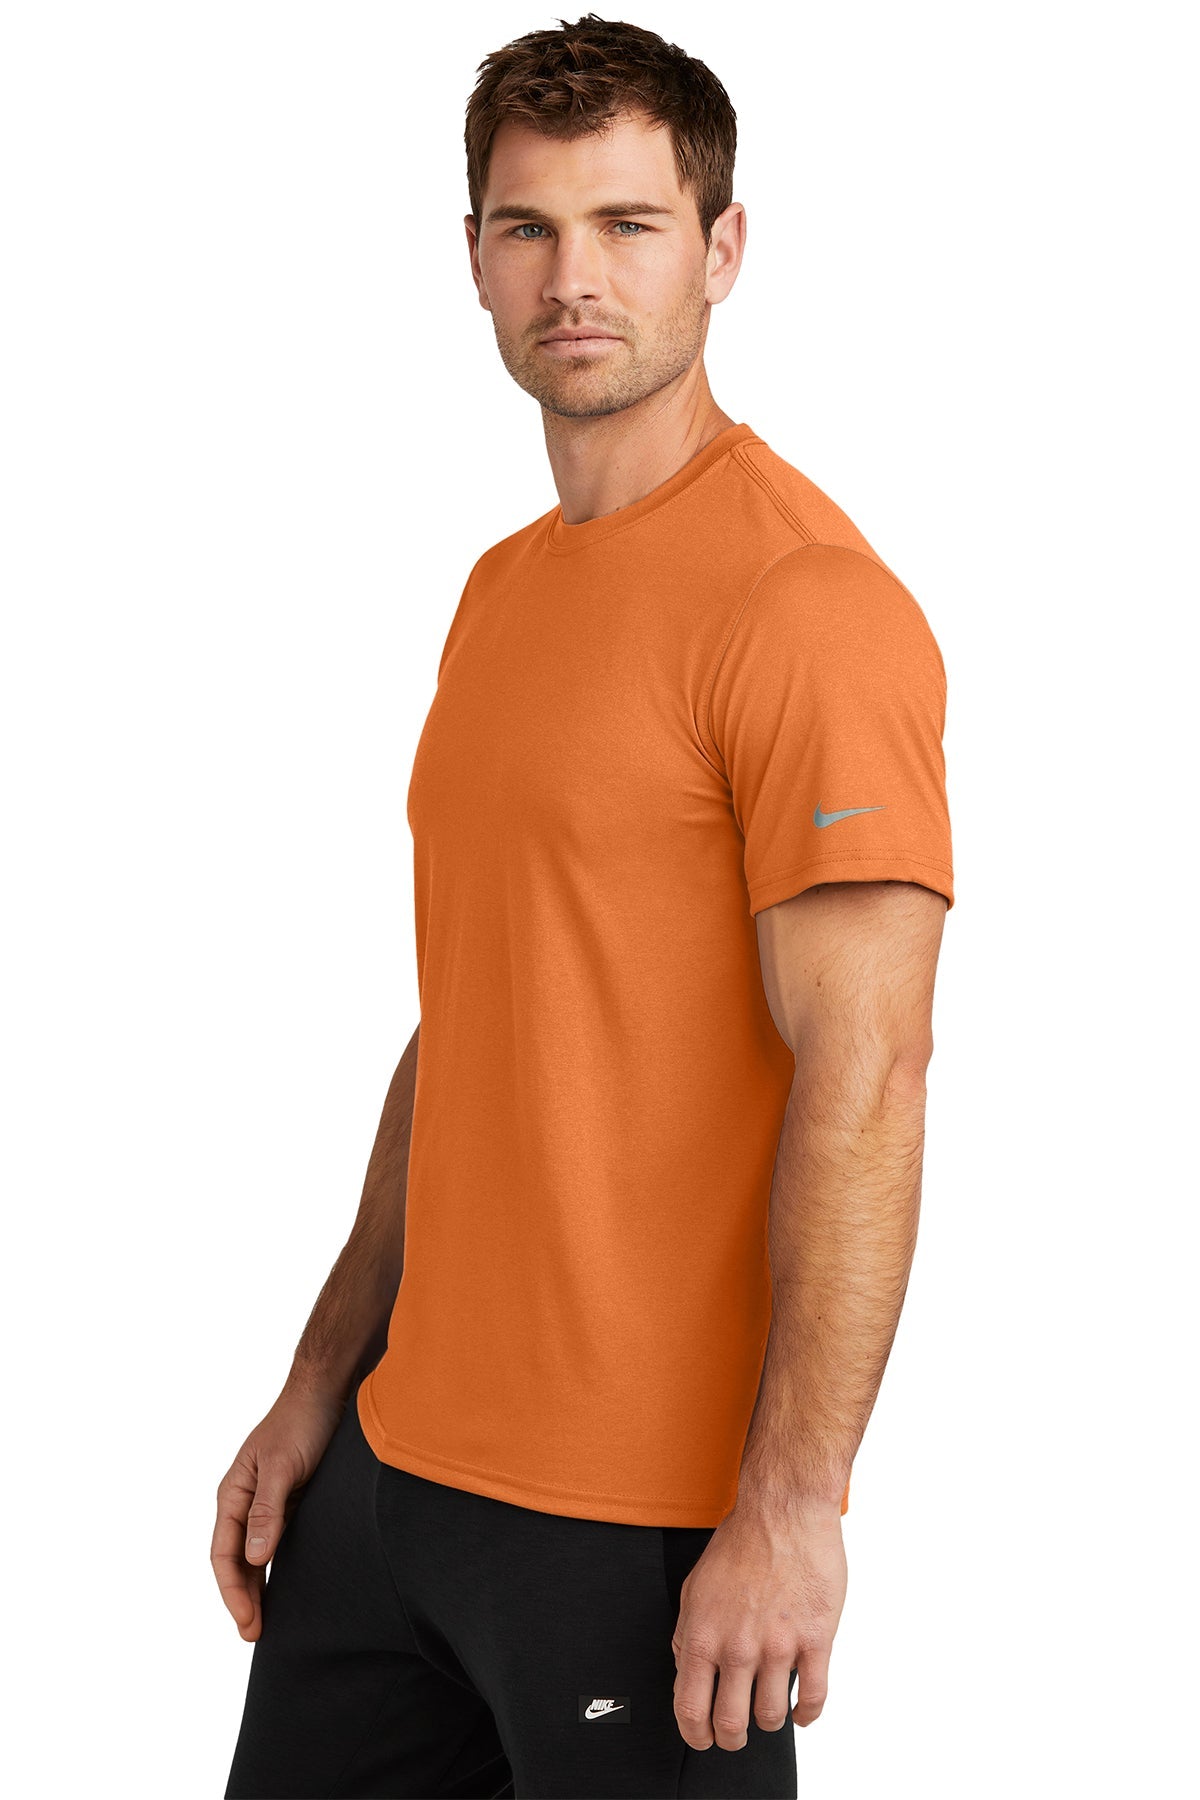 Nike Swoosh Sleeve rLegend Customized Tee's, Desert Orange